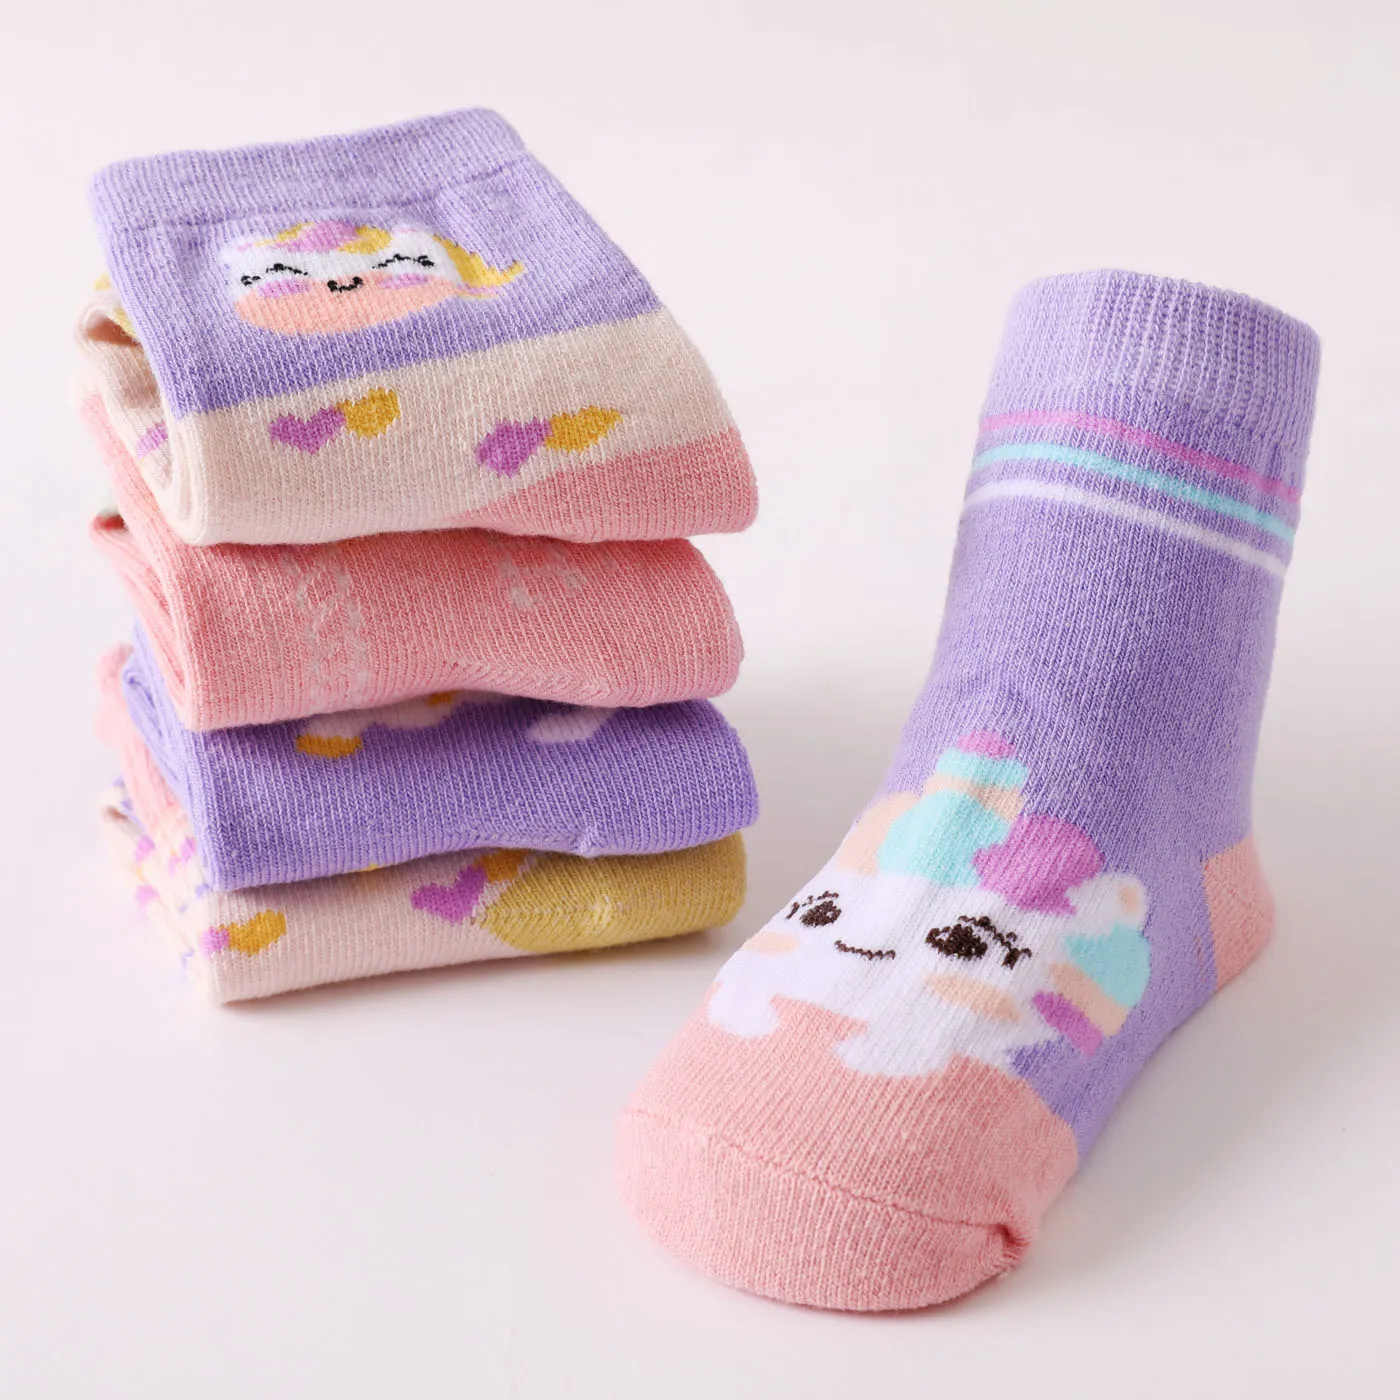 5-pairs Baby / Toddler Cartoon Unicorn Jacquard Socks